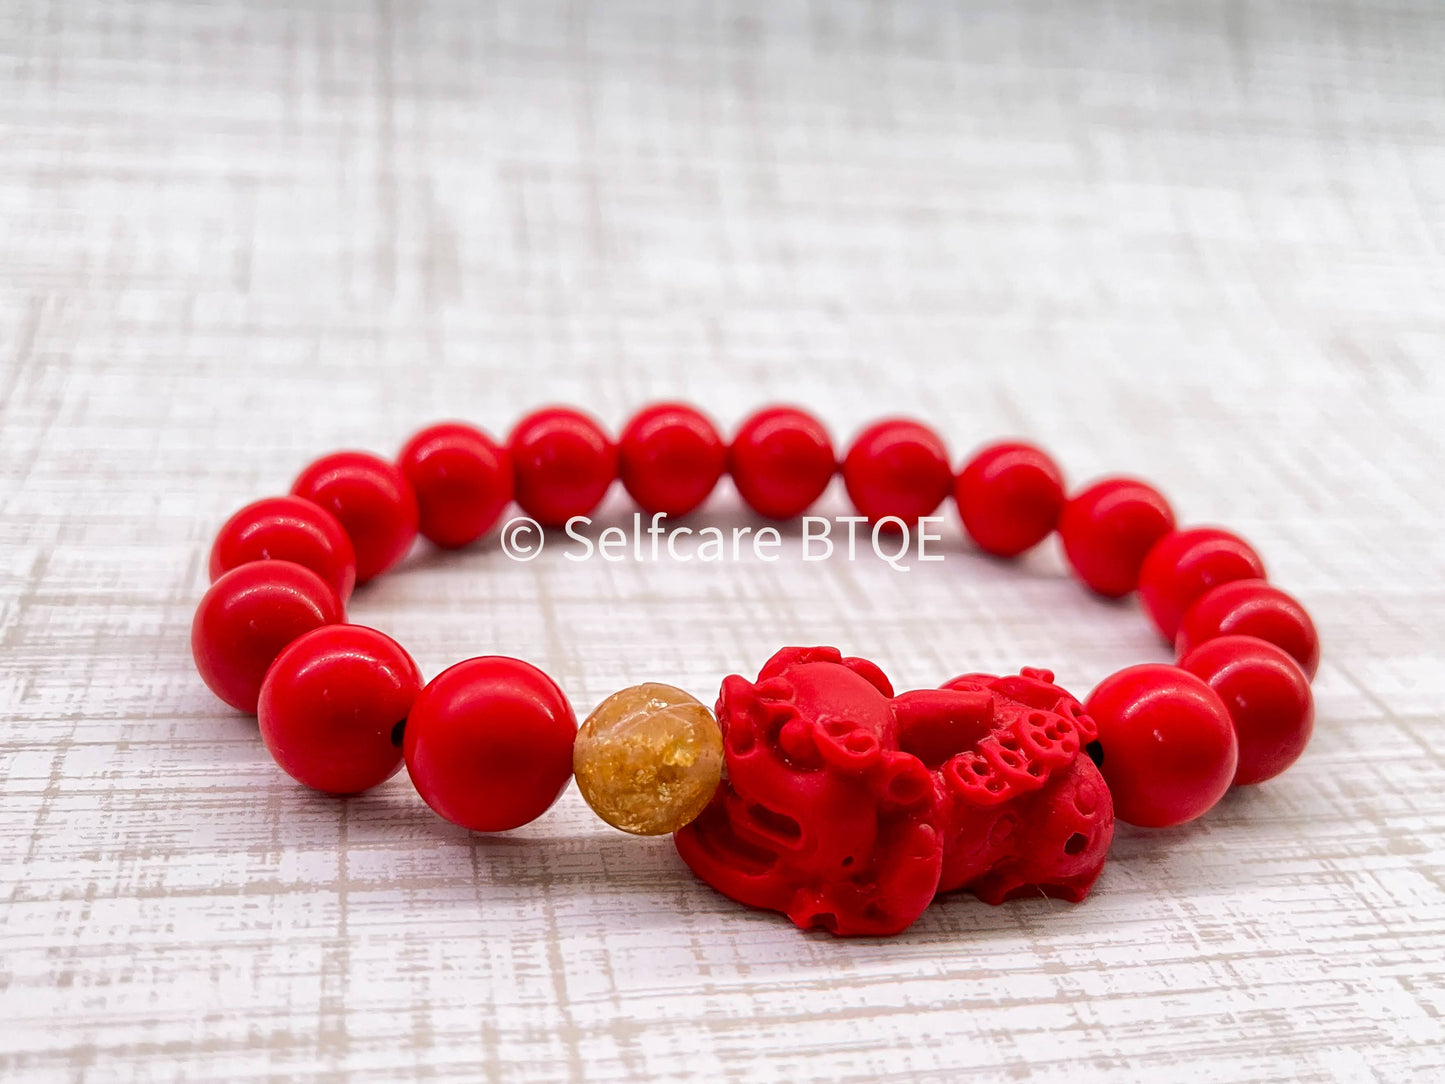 Pi Xiu Pi Yao Wealth & Good Luck Bracelet with Red Cinnabar Stones